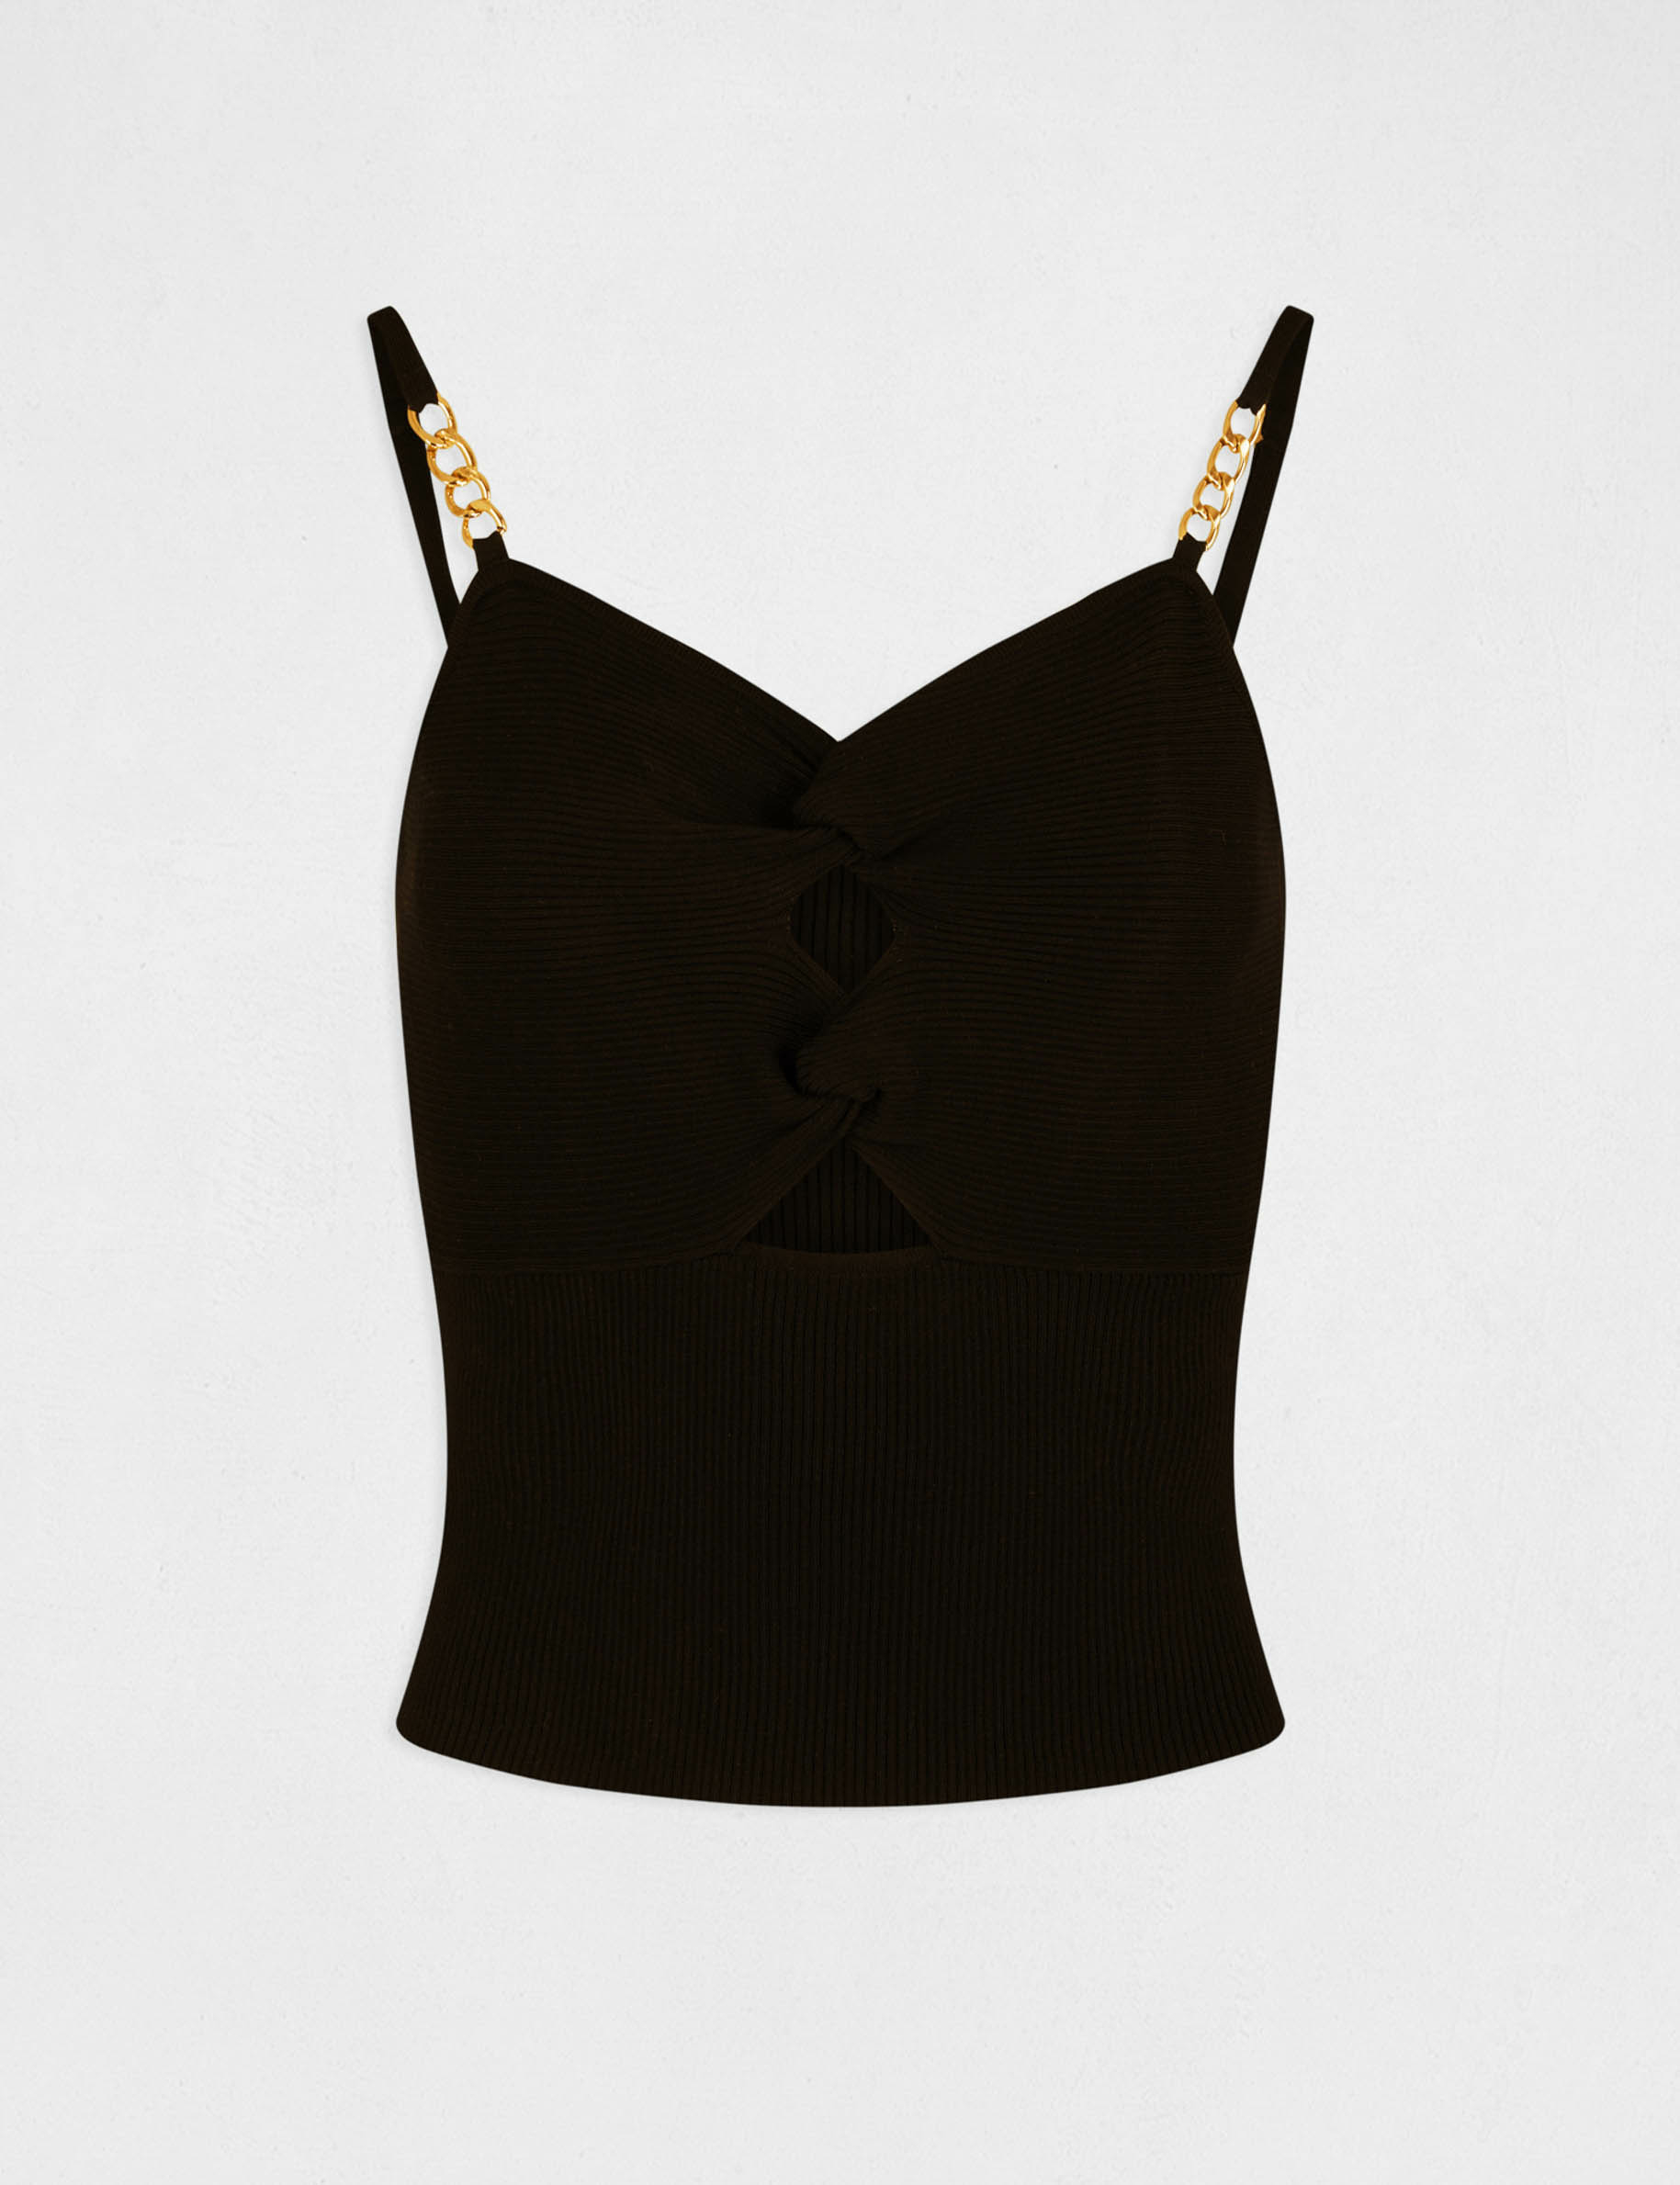 Jumper vest top with jewelled details black ladies'